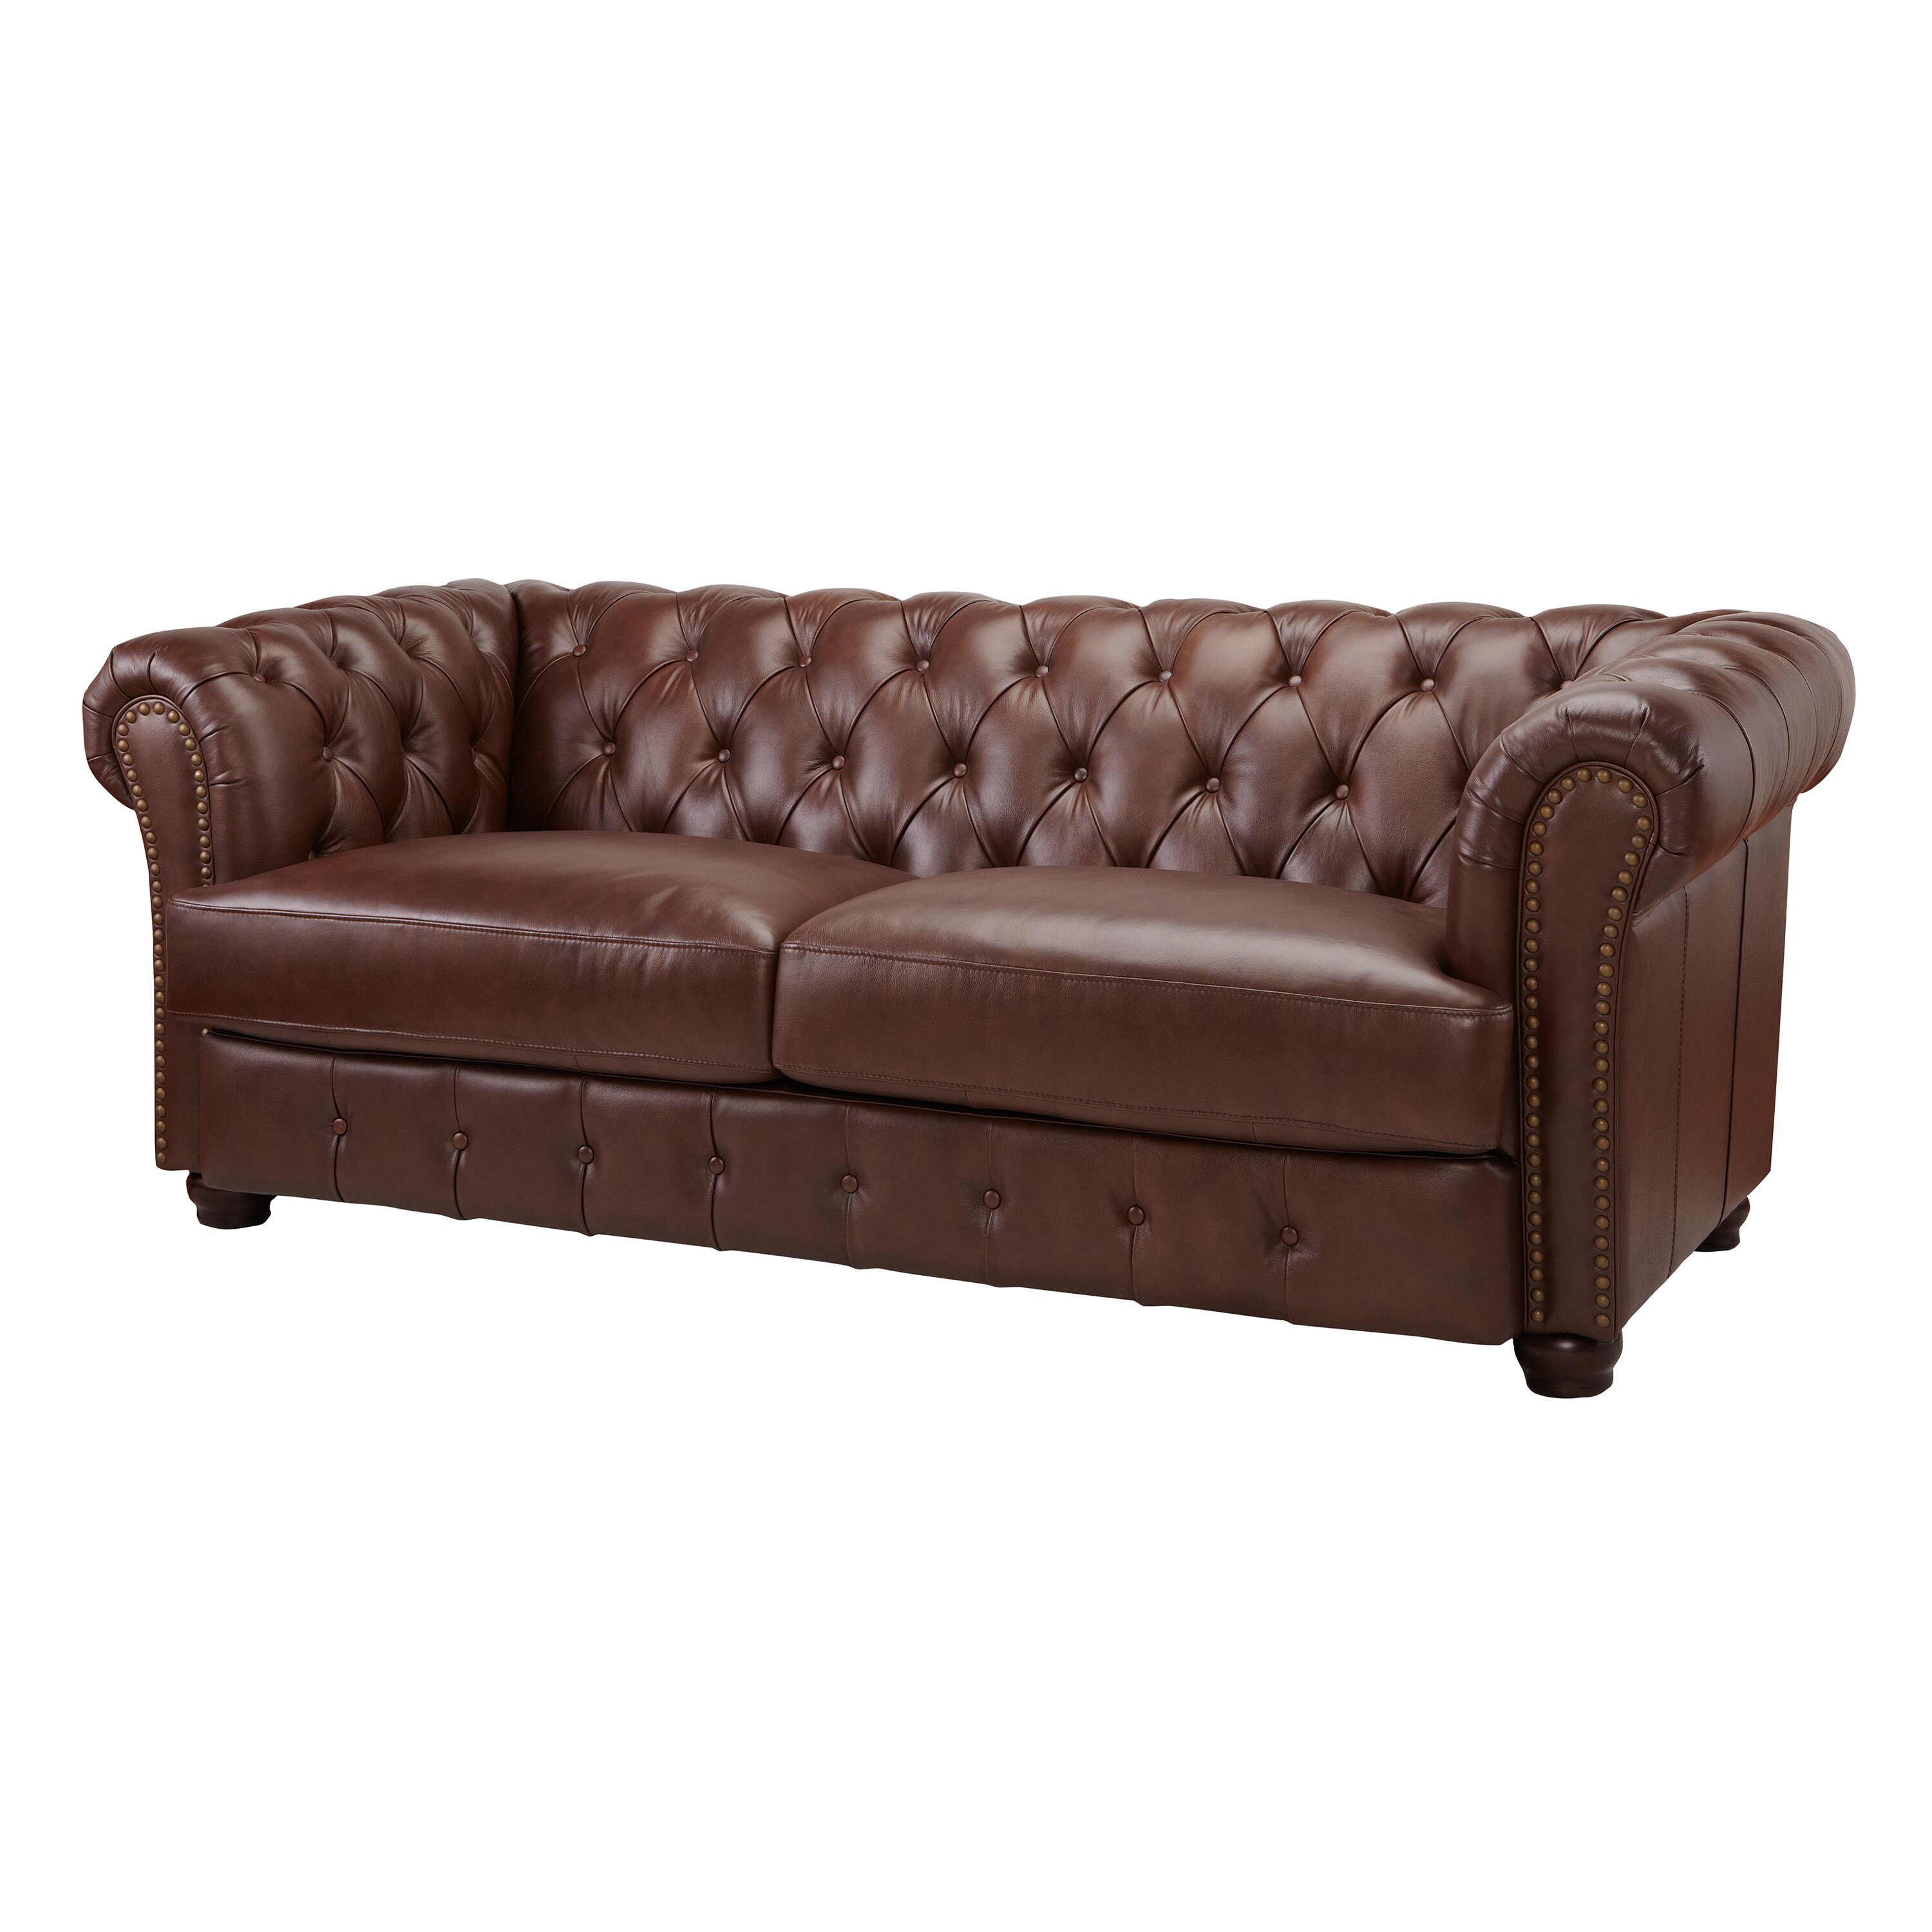 Decoro Leather Furniture 78